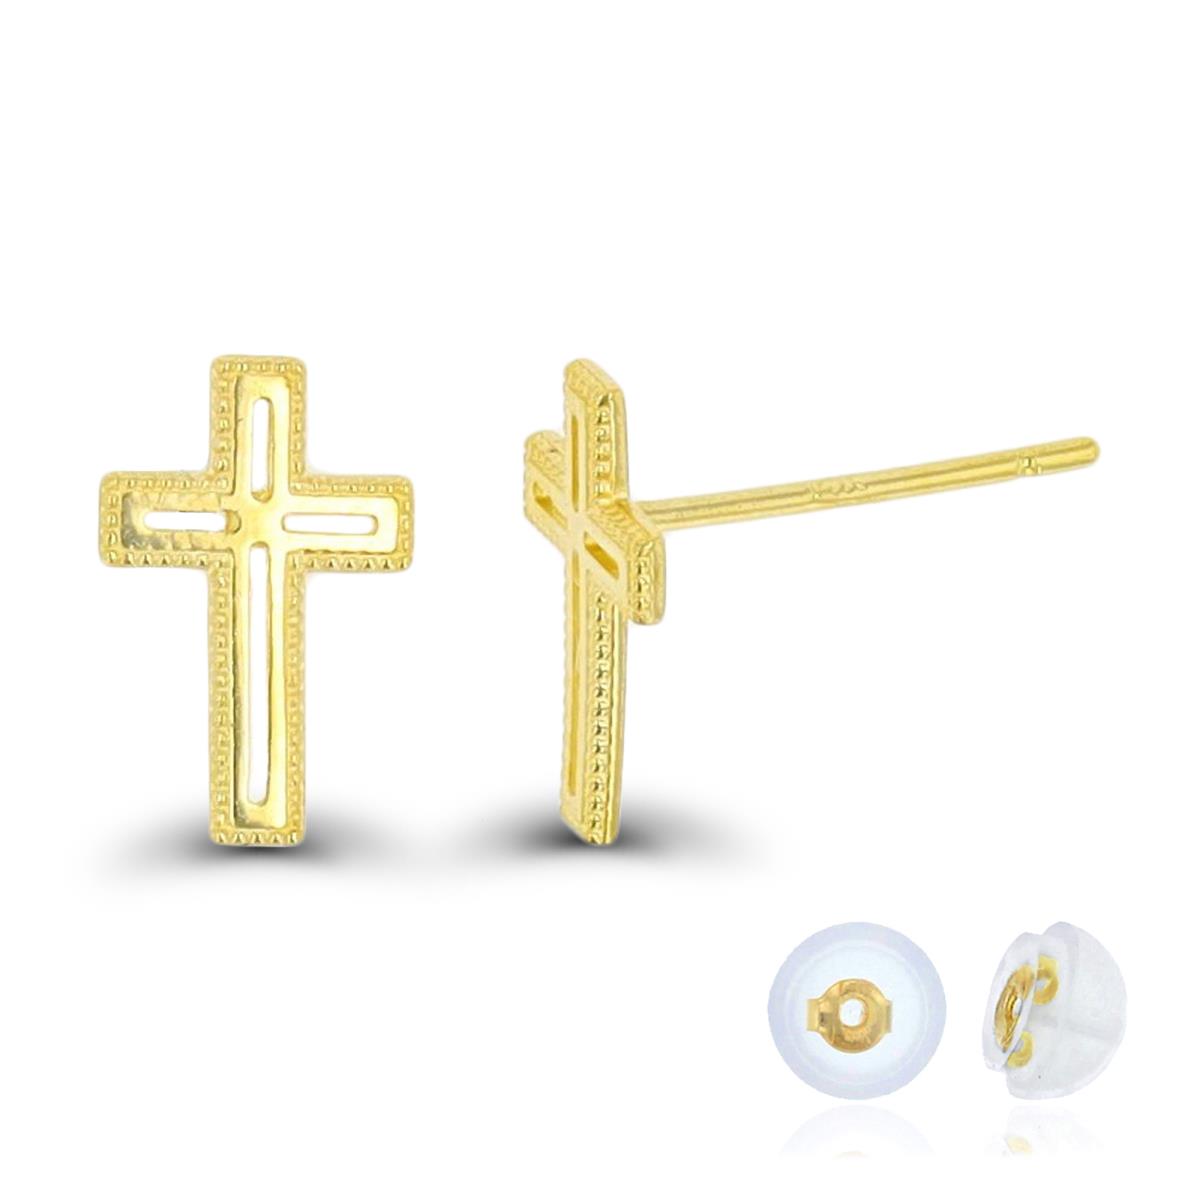 10K Yellow Gold Milgrain Cross Stud Earrings with Bubble Silicone Backs